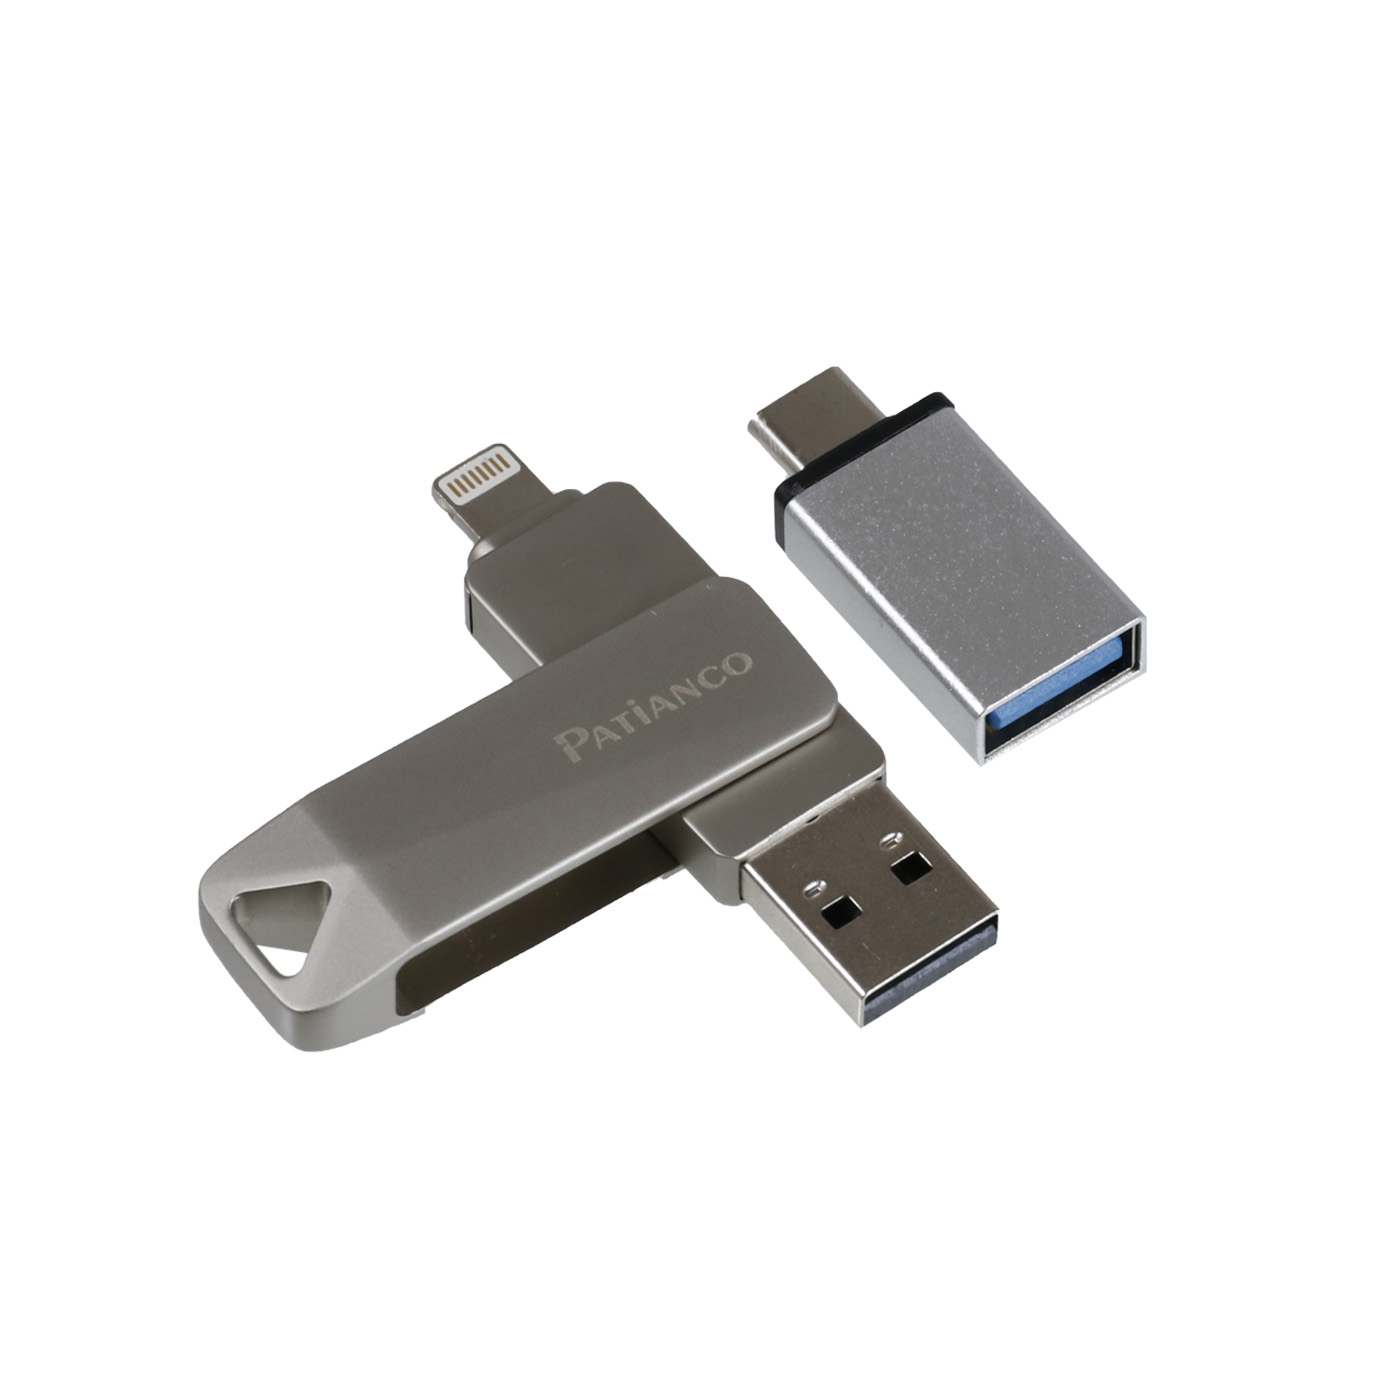 Jonwiner USBメモリ 256GB 対応 USB 3.0 高速 USBメモリー 256GB 大容量 メモリースティック 超小型 軽量